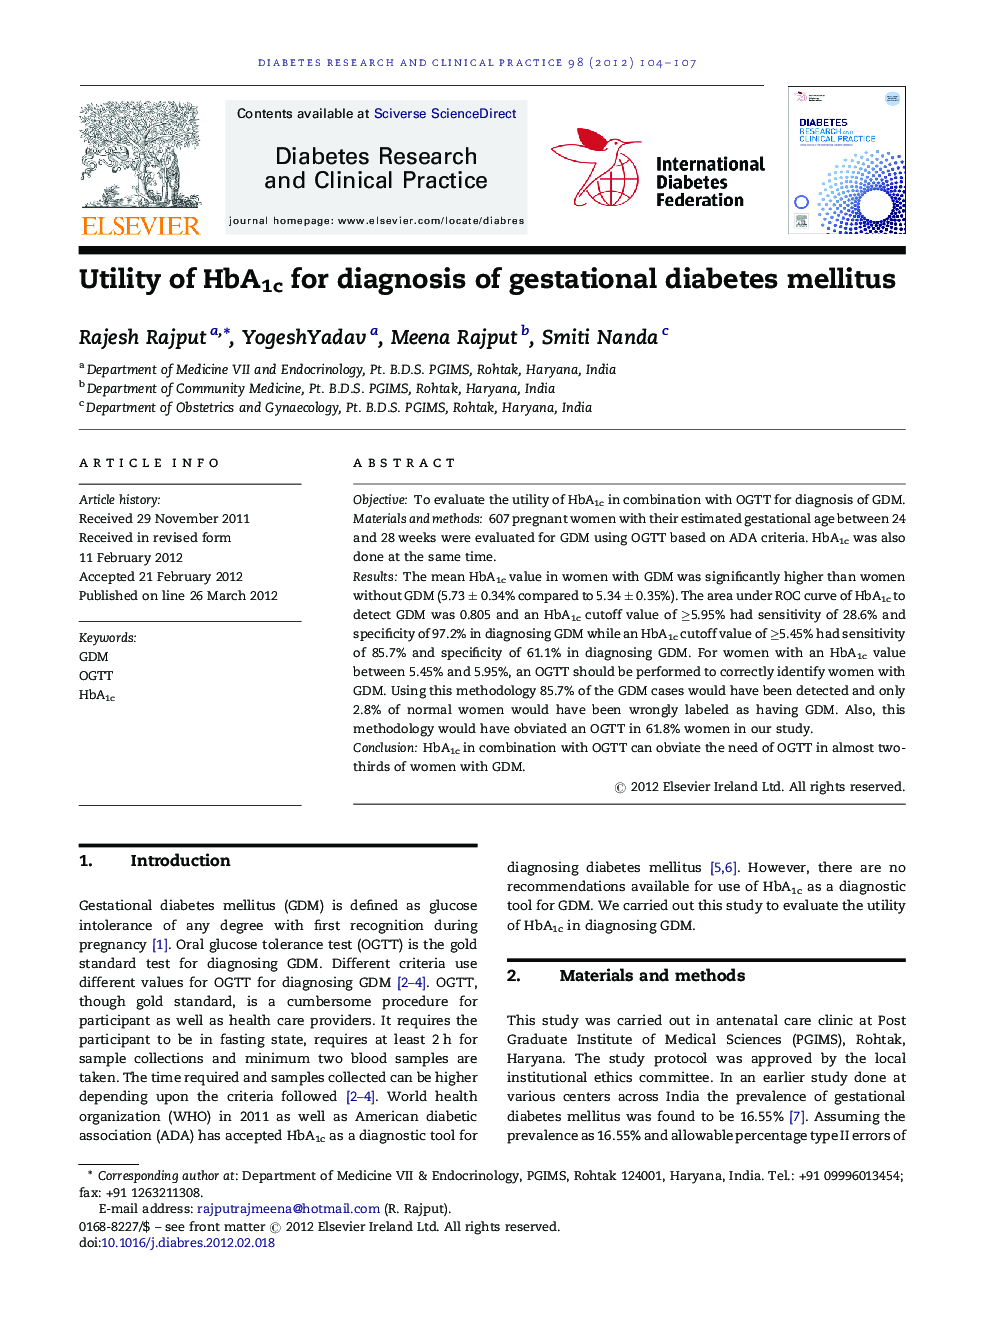 Utility of HbA1c for diagnosis of gestational diabetes mellitus